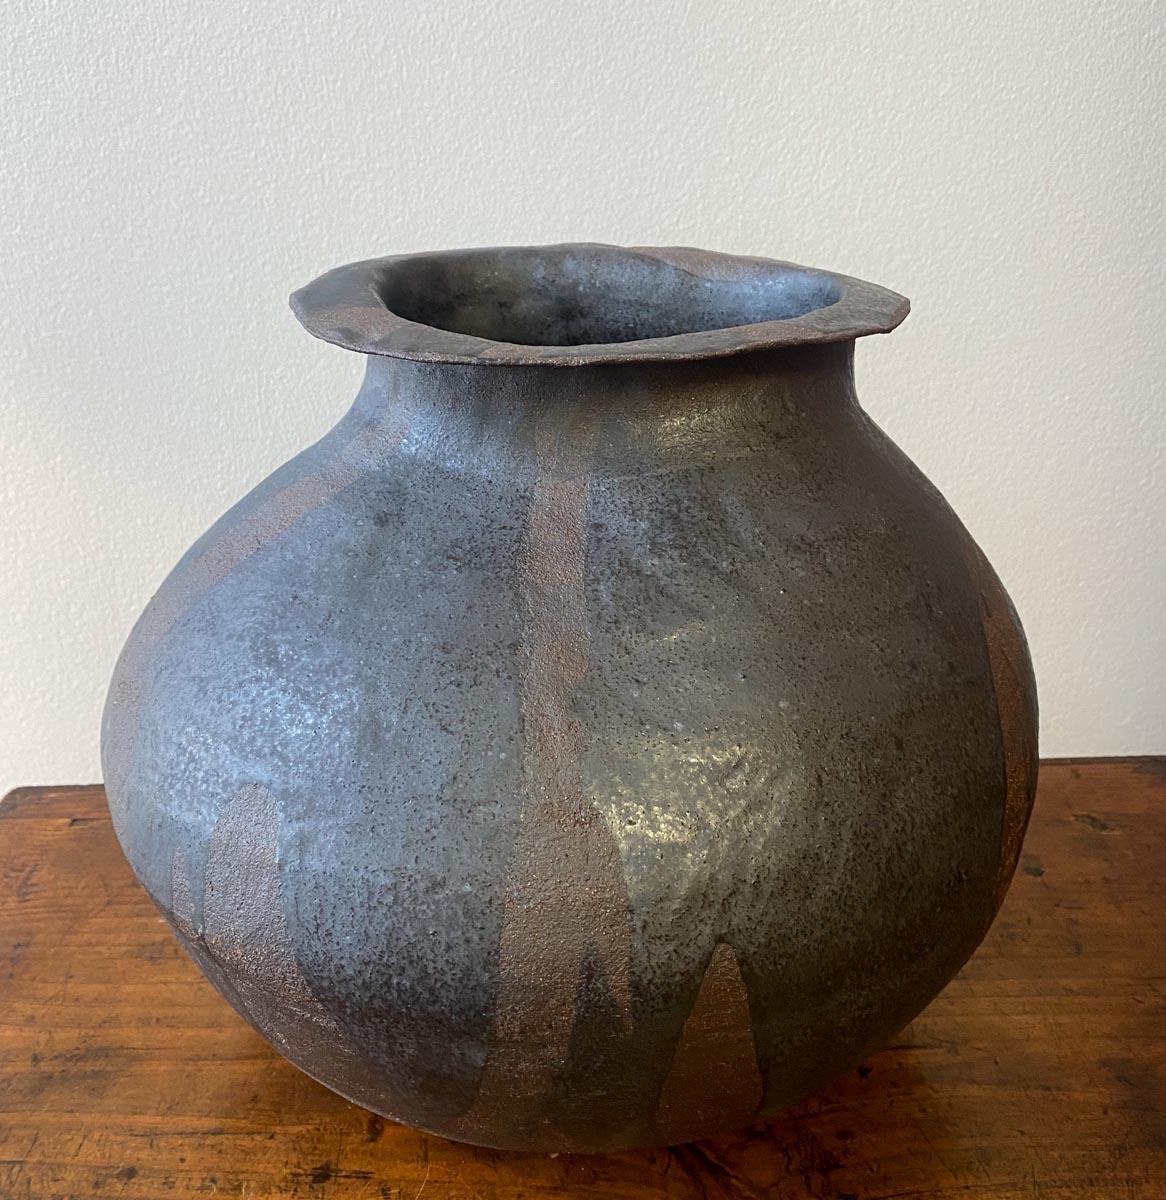 Hand built clay pot by ceramic artist Sally Terrell of Santa Barbara, California. Dark, high fired clay with glaze.